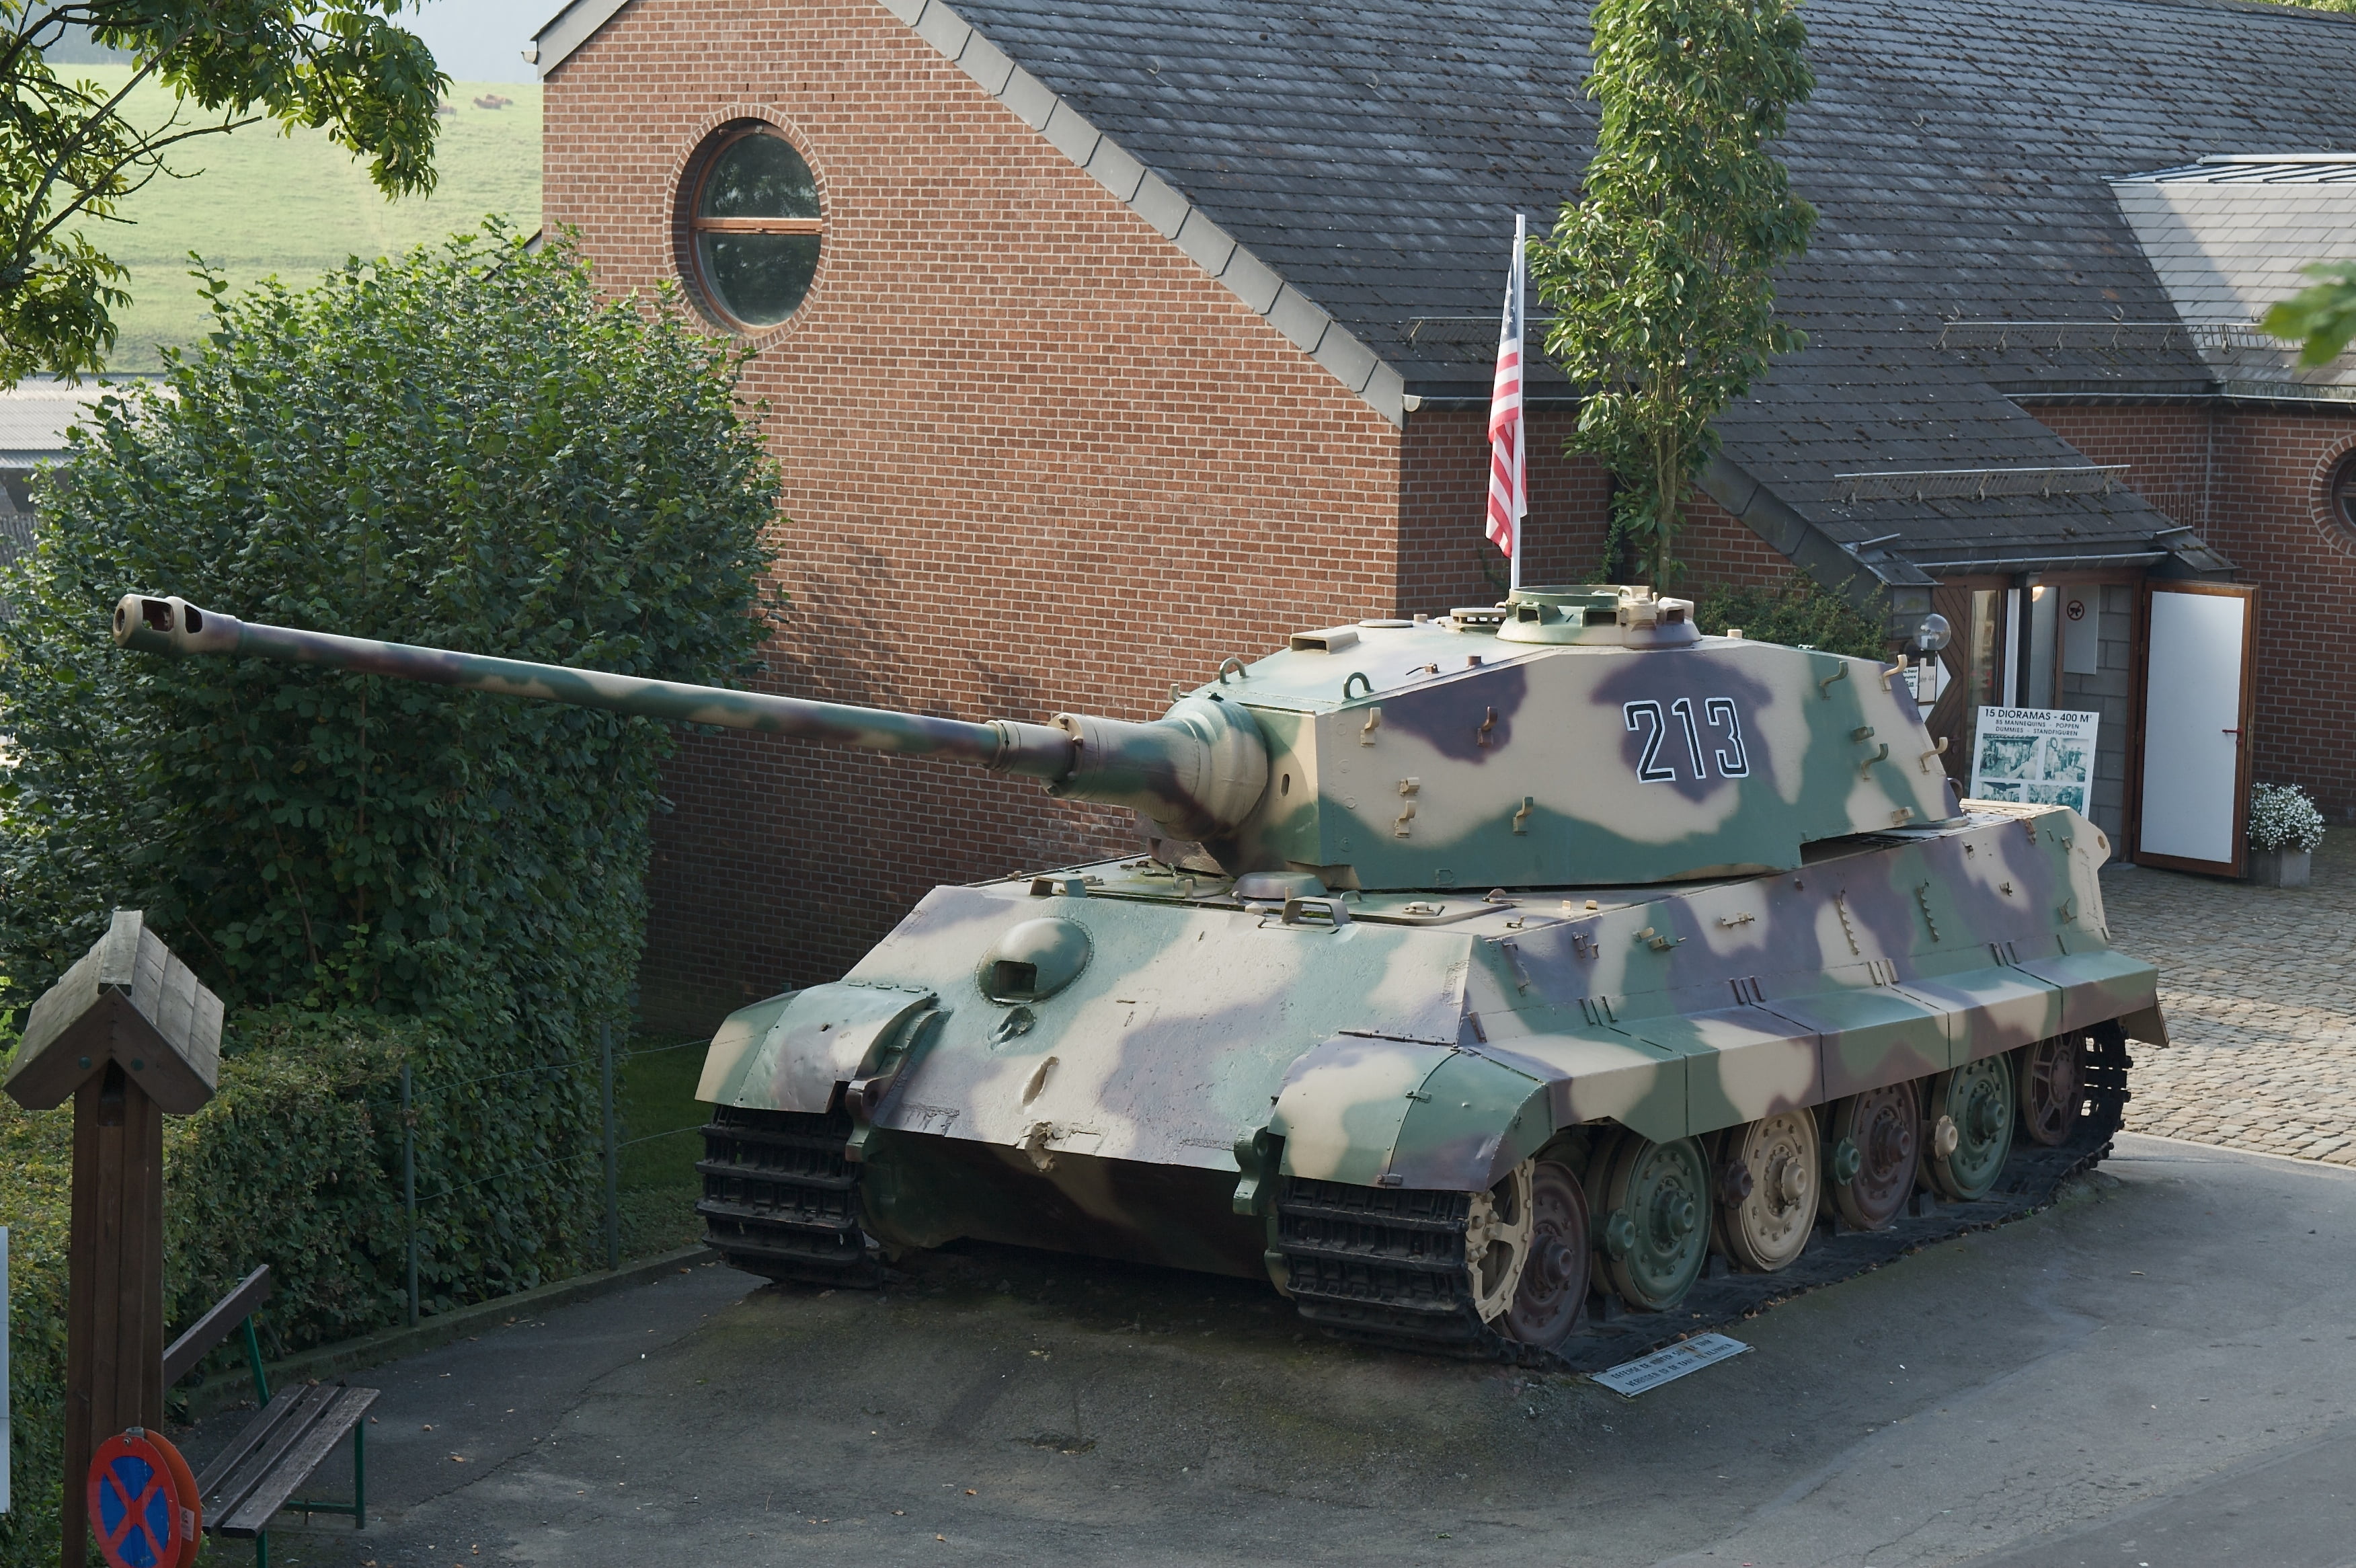 beige and green camouflage battle tank, Belgium, The second world war